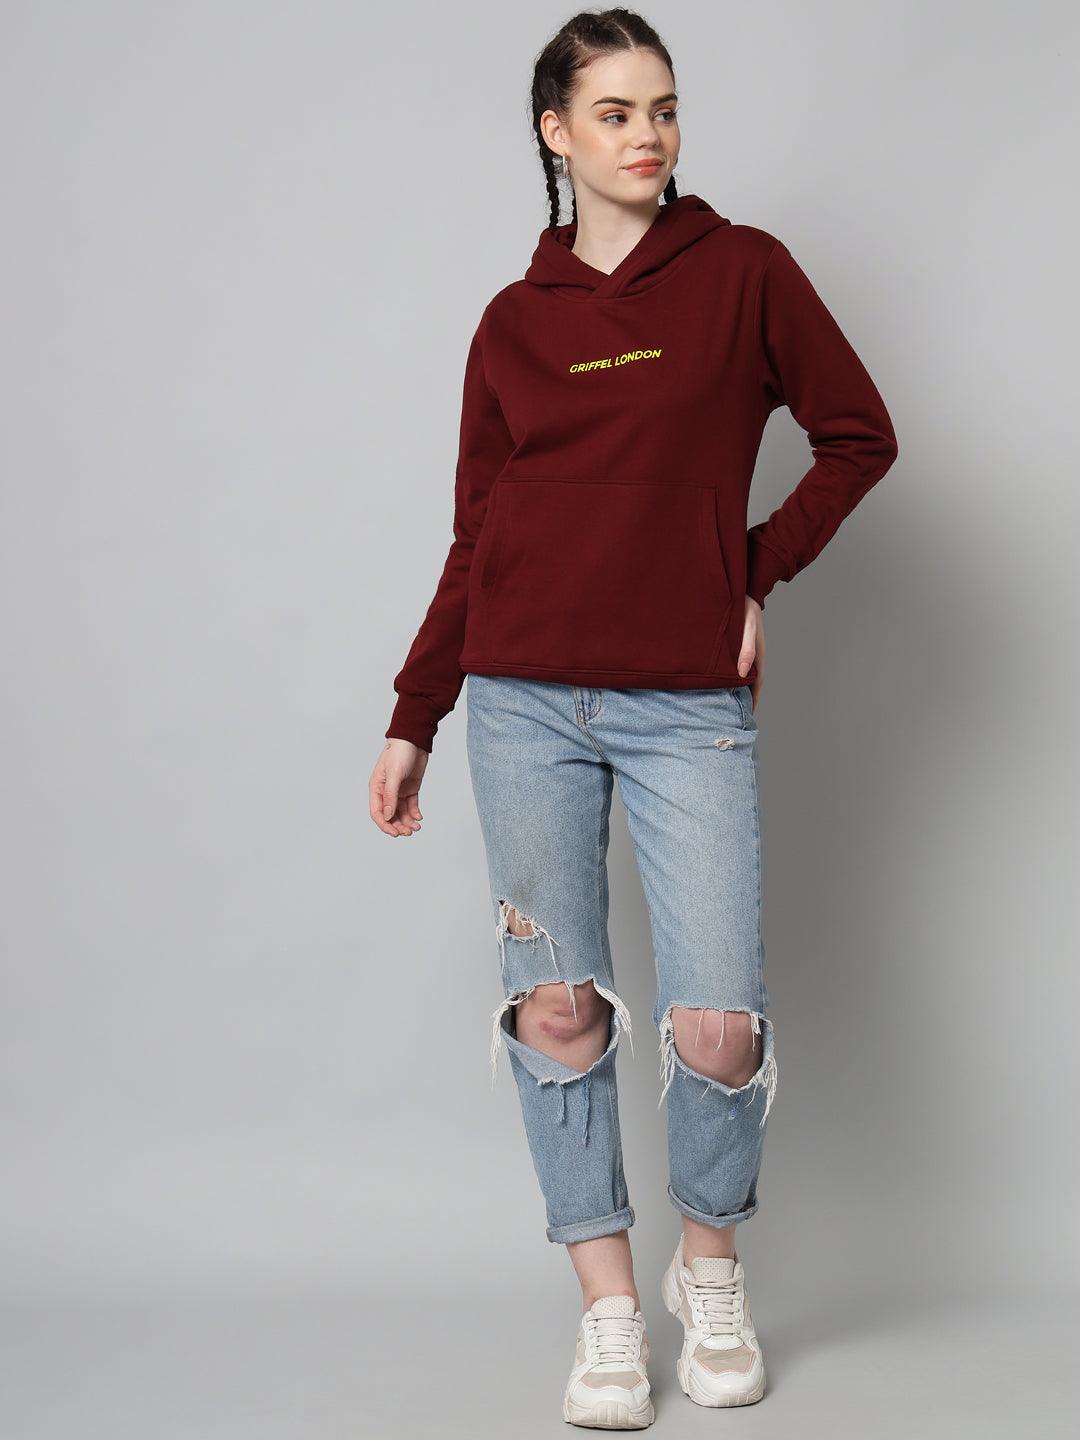 Griffel Women’s Cotton Fleece Full Sleeve Maroon Hoodie Sweatshirt - griffel